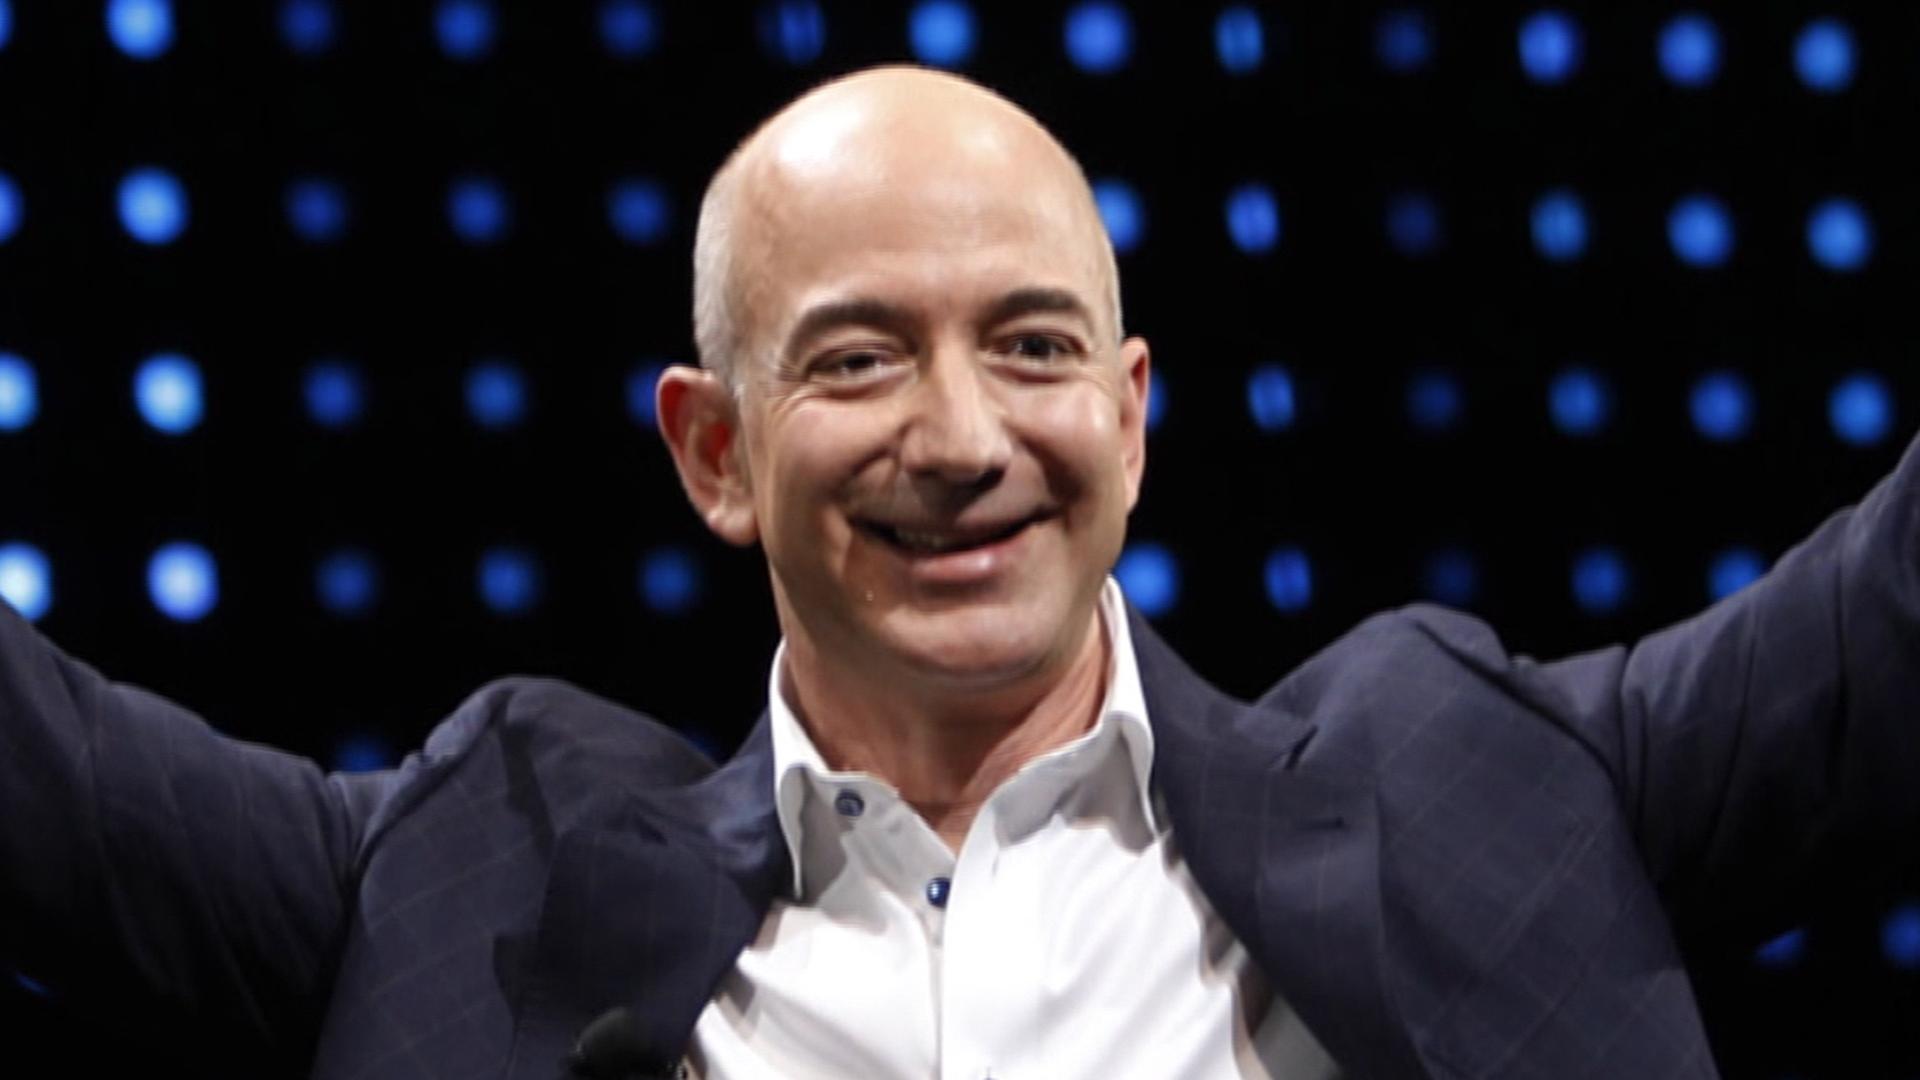 Bold CEO Jeff Bezos revels in risk